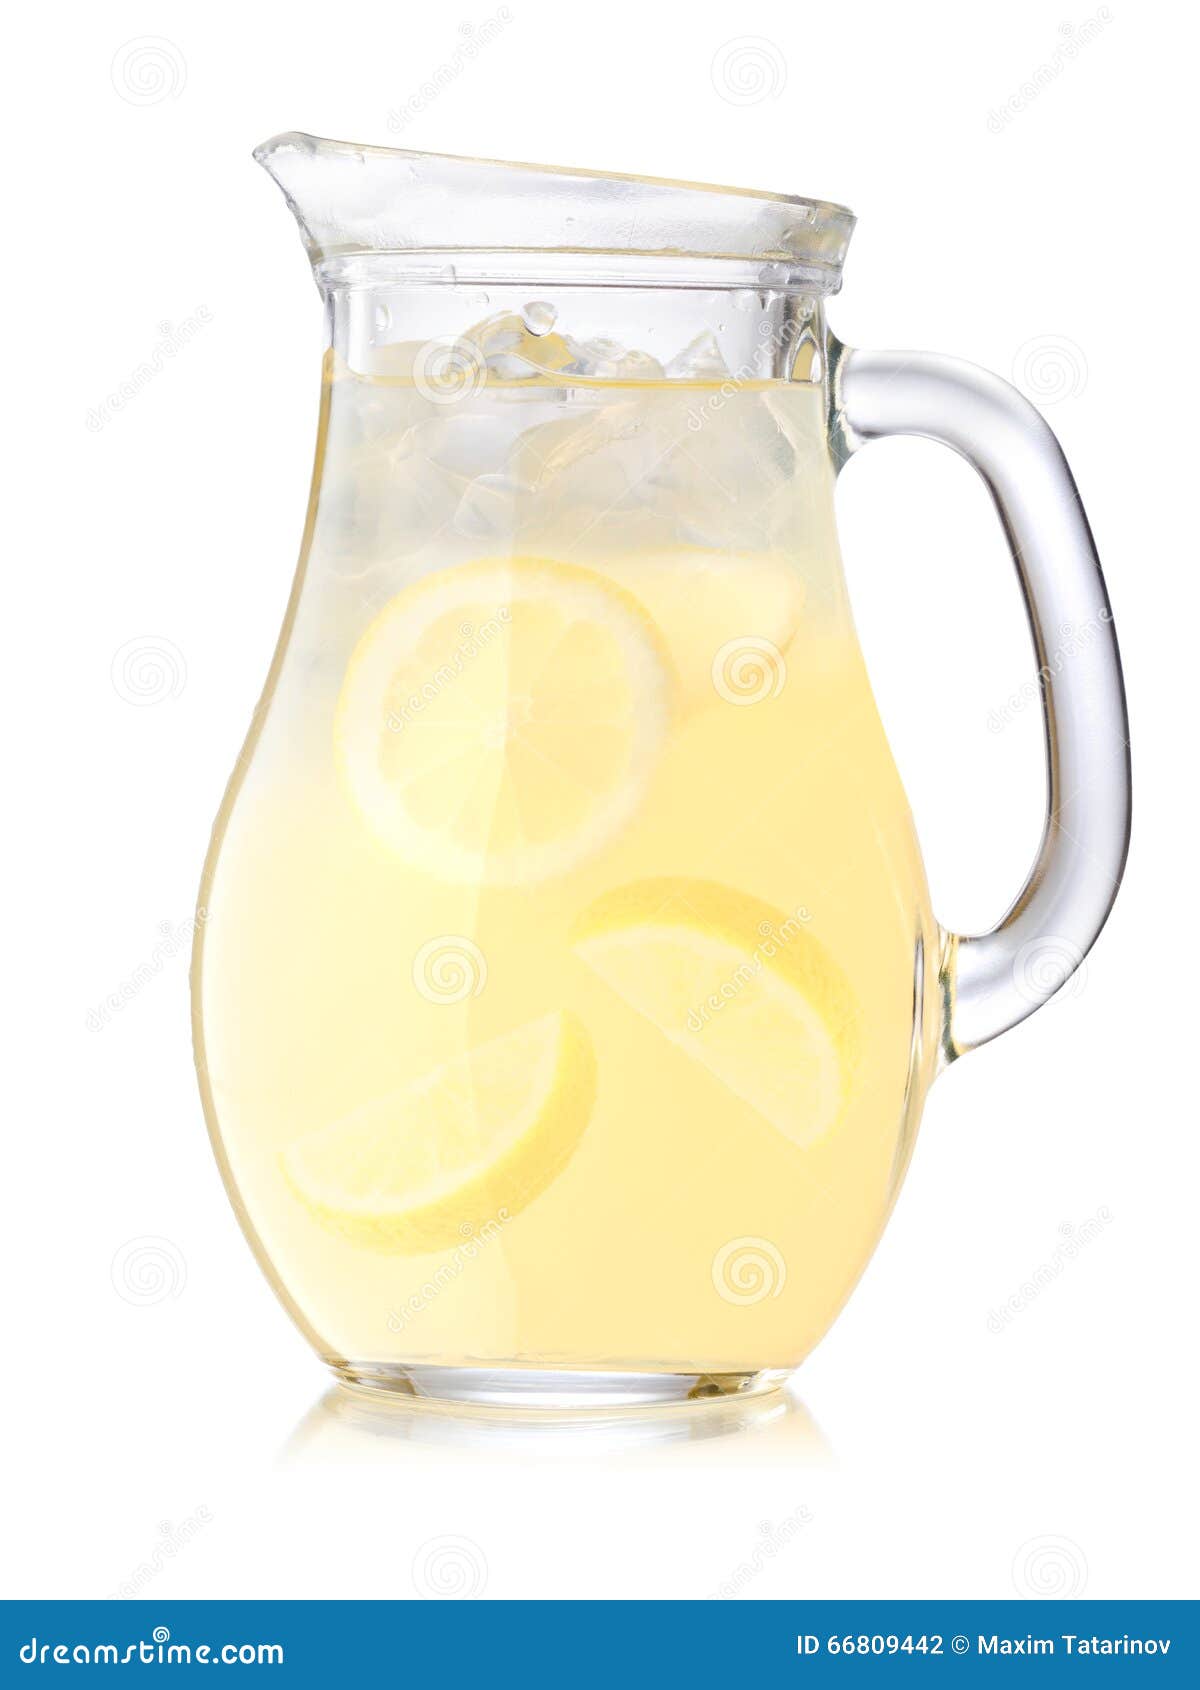 iced lemonade pitcher